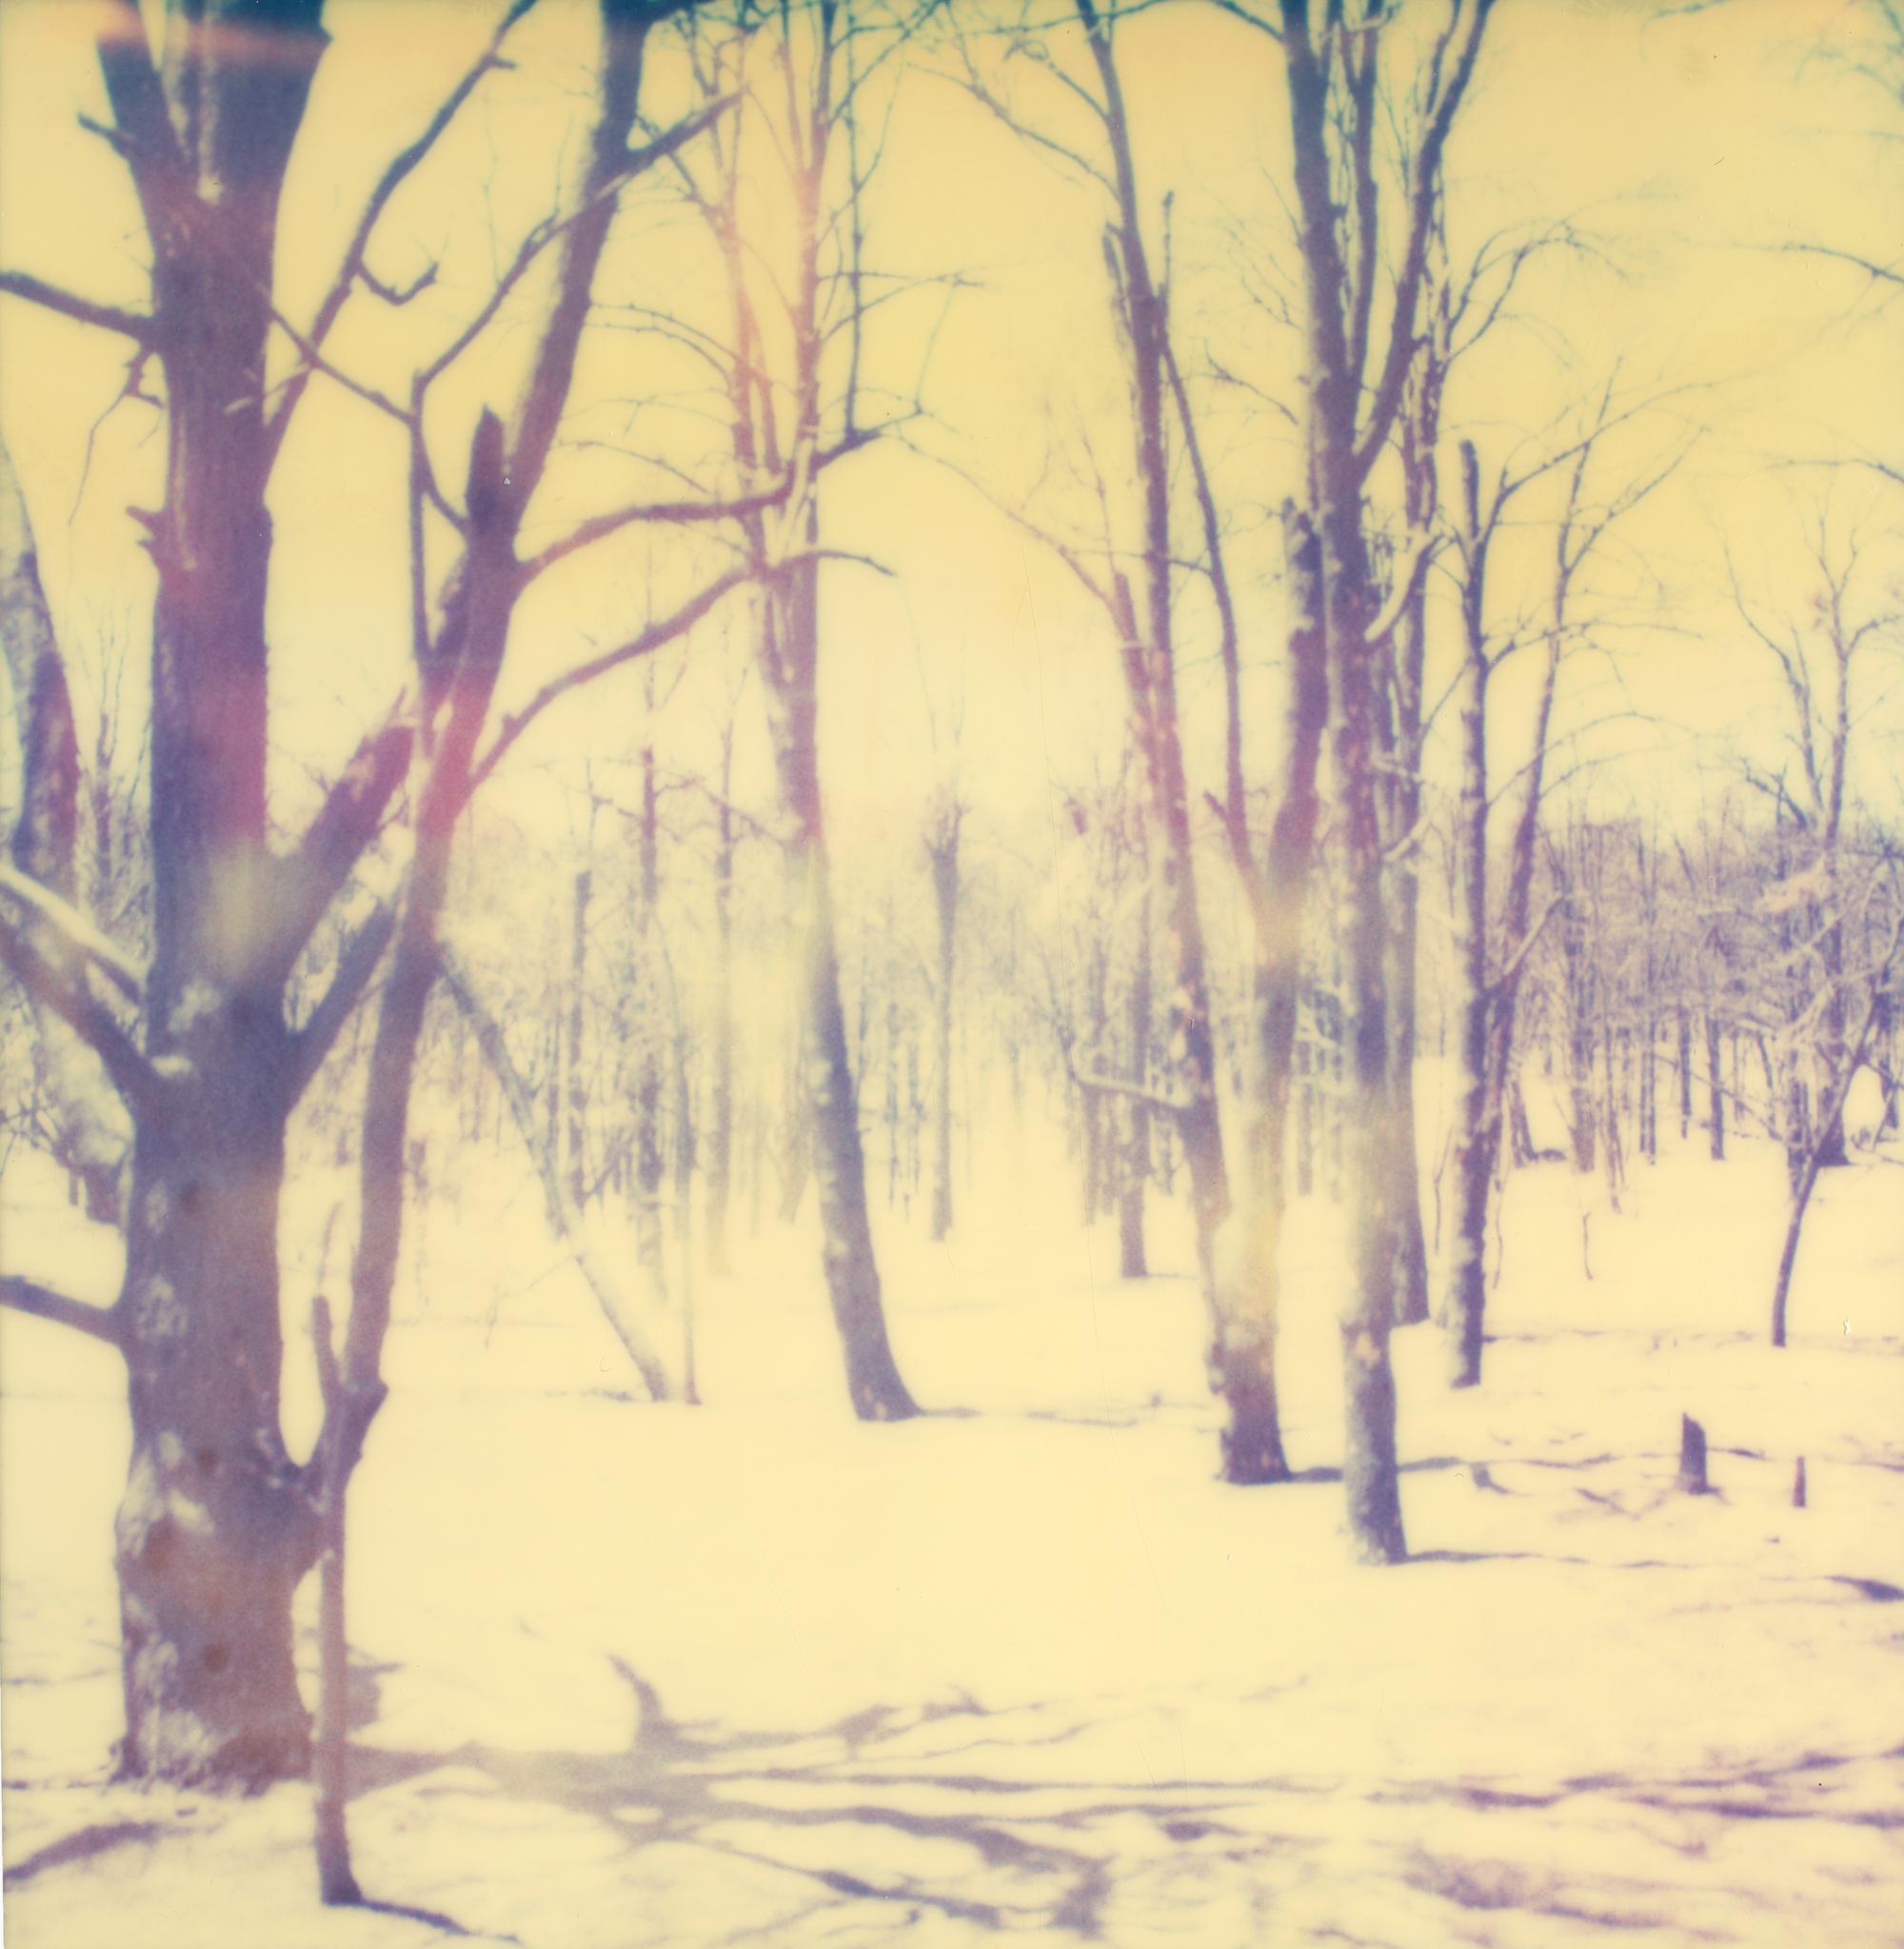 Stefanie Schneider Landscape Photograph - Forest White (The Last Picture Show) - analog, Polaroid